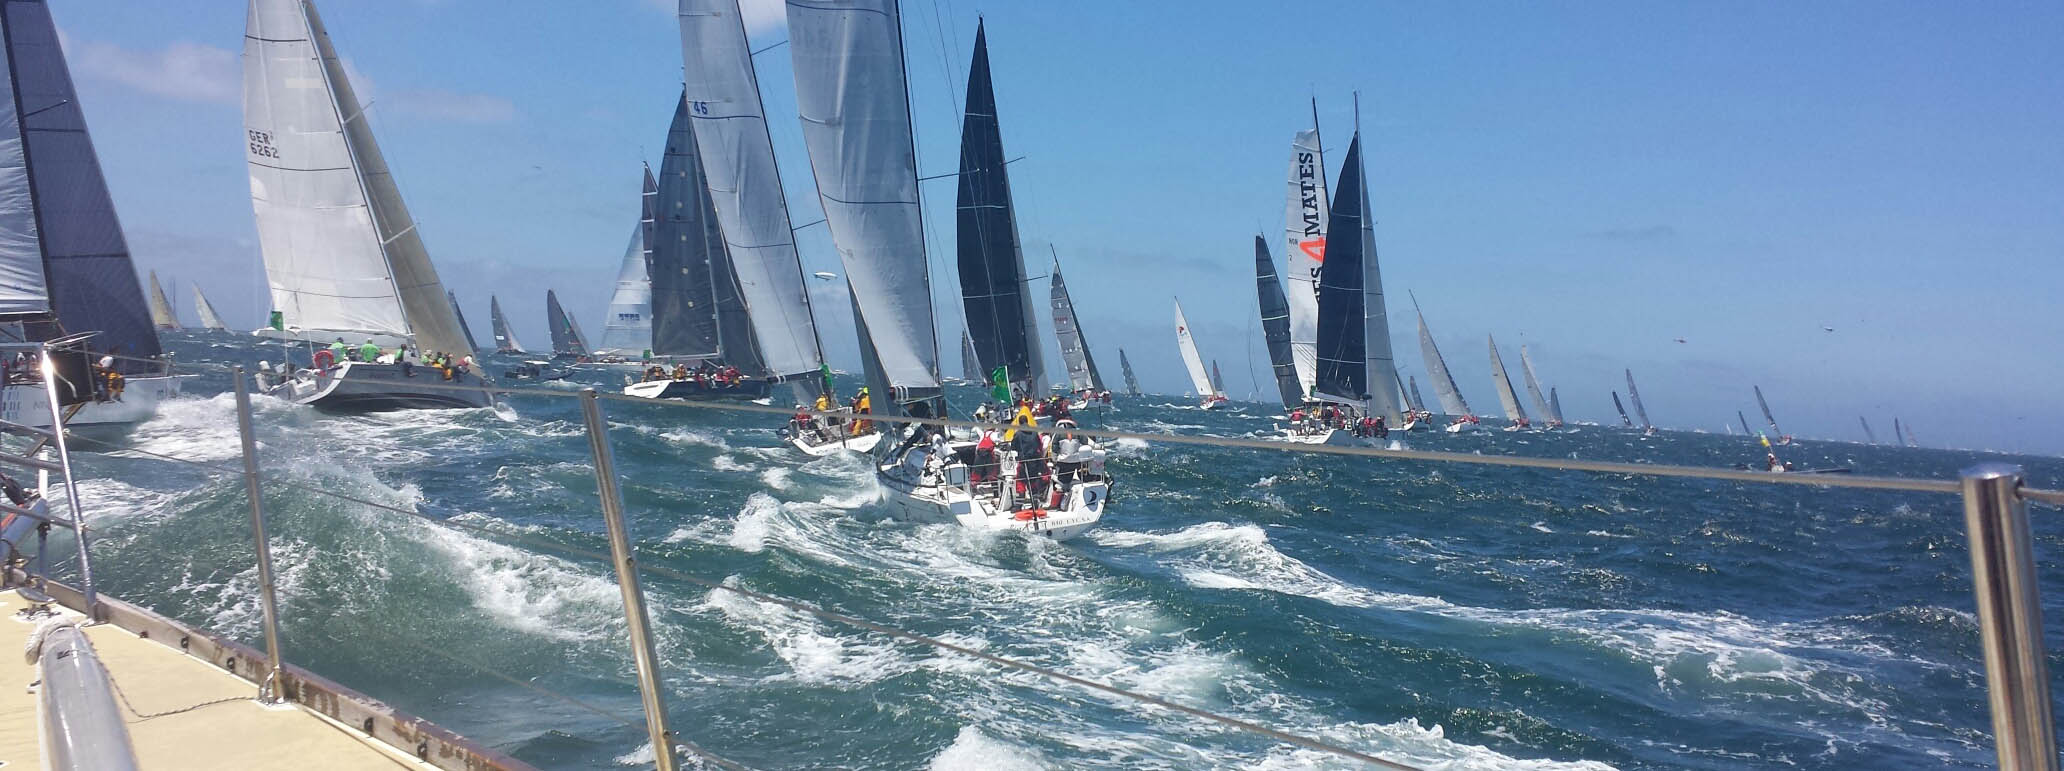 Clipper Race fleet arriving in Australia ahead of Rolex Sydney Hobart Yacht Race